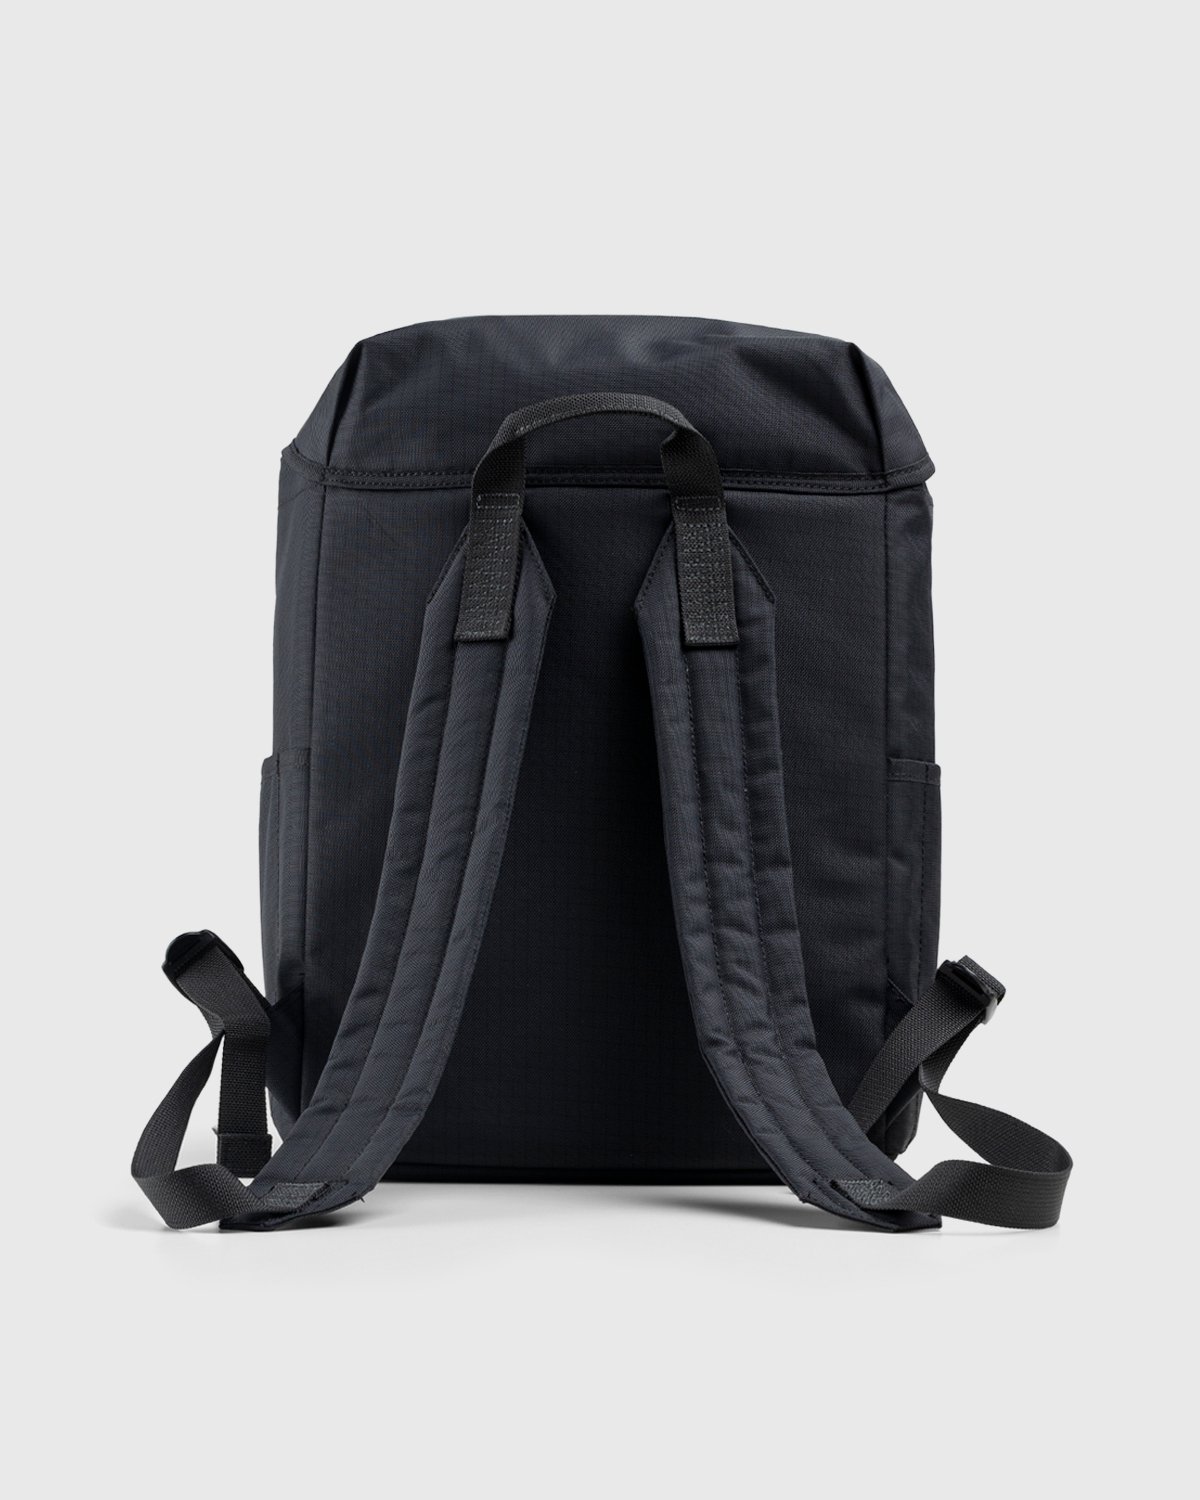 Acne Studios - Ripstop Nylon Backpack Black - Accessories - Black - Image 2